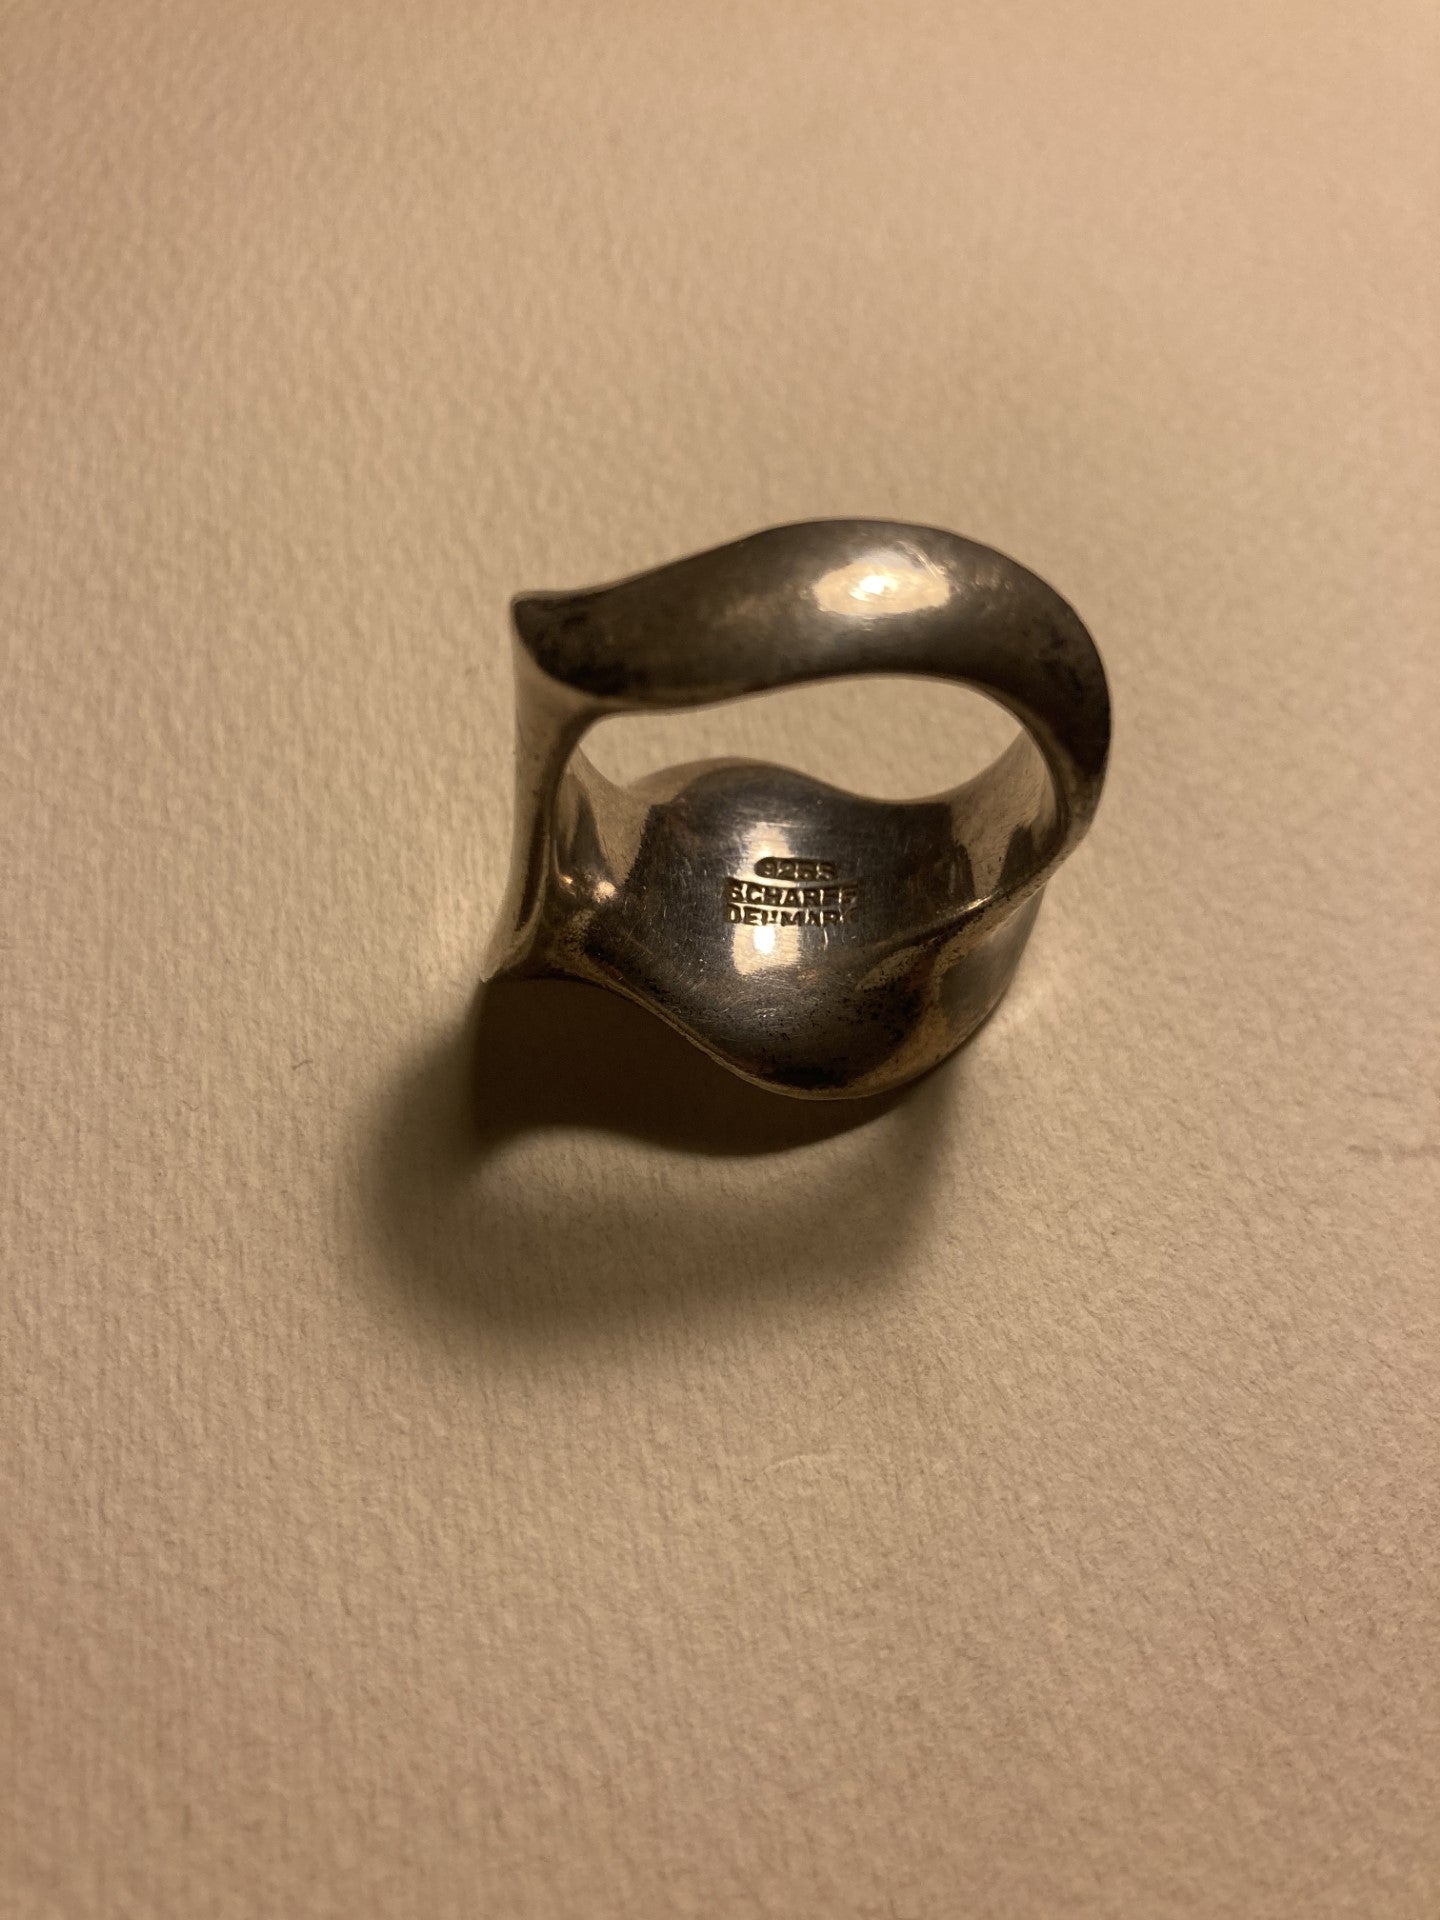 Beautiful silver ring by silversmith Allan Scharff - no. 01049